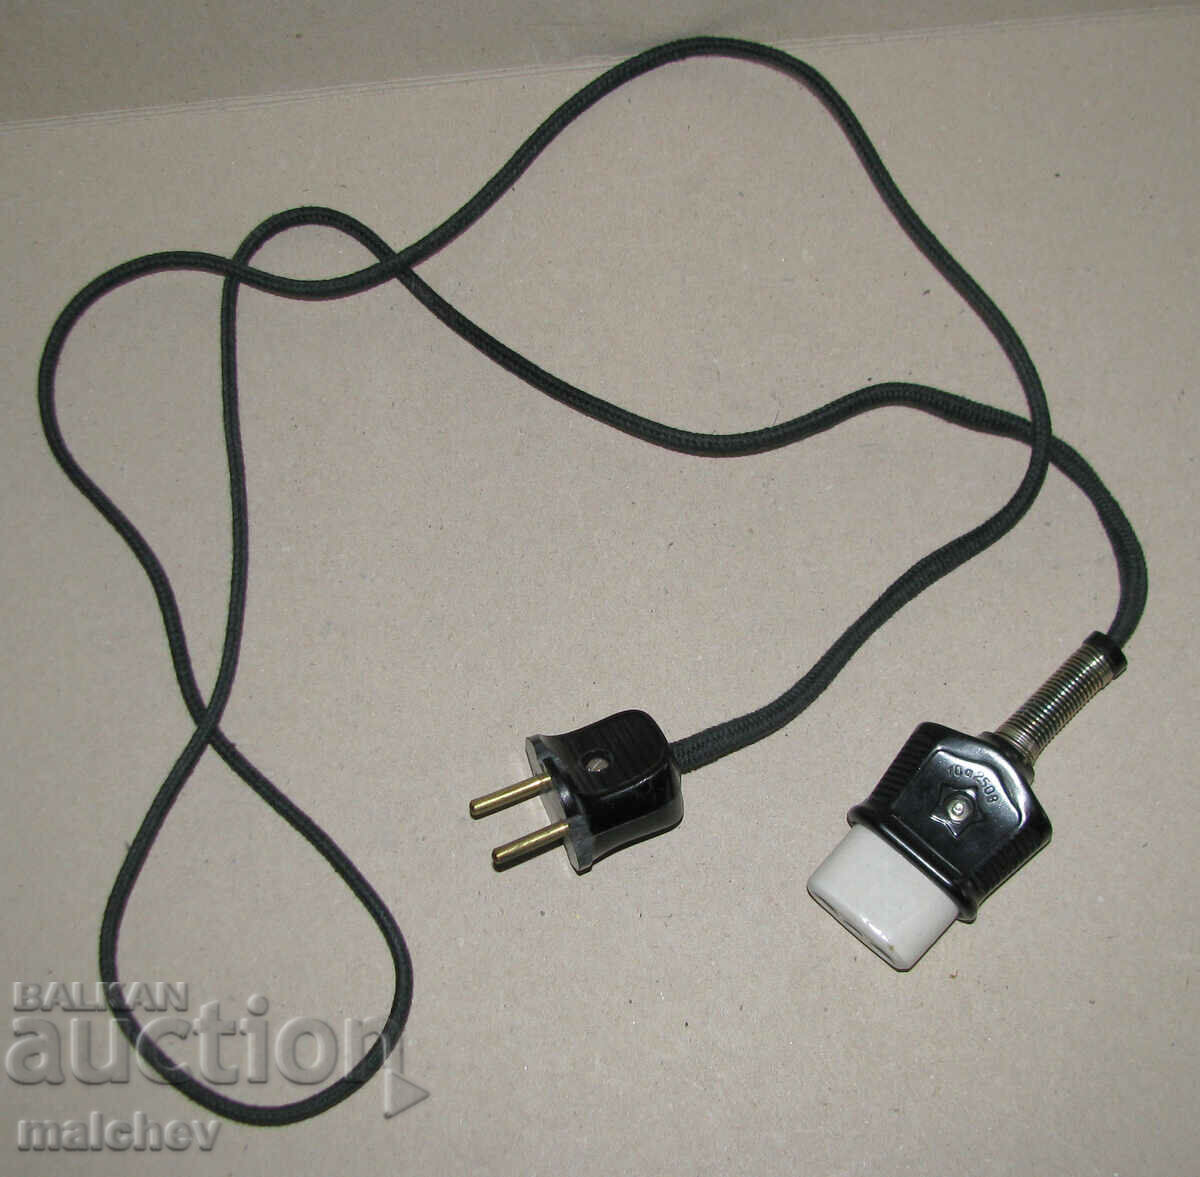 Cablu prelungitor 1,5 m cu mufa pentru aragaz si toaster, excelent